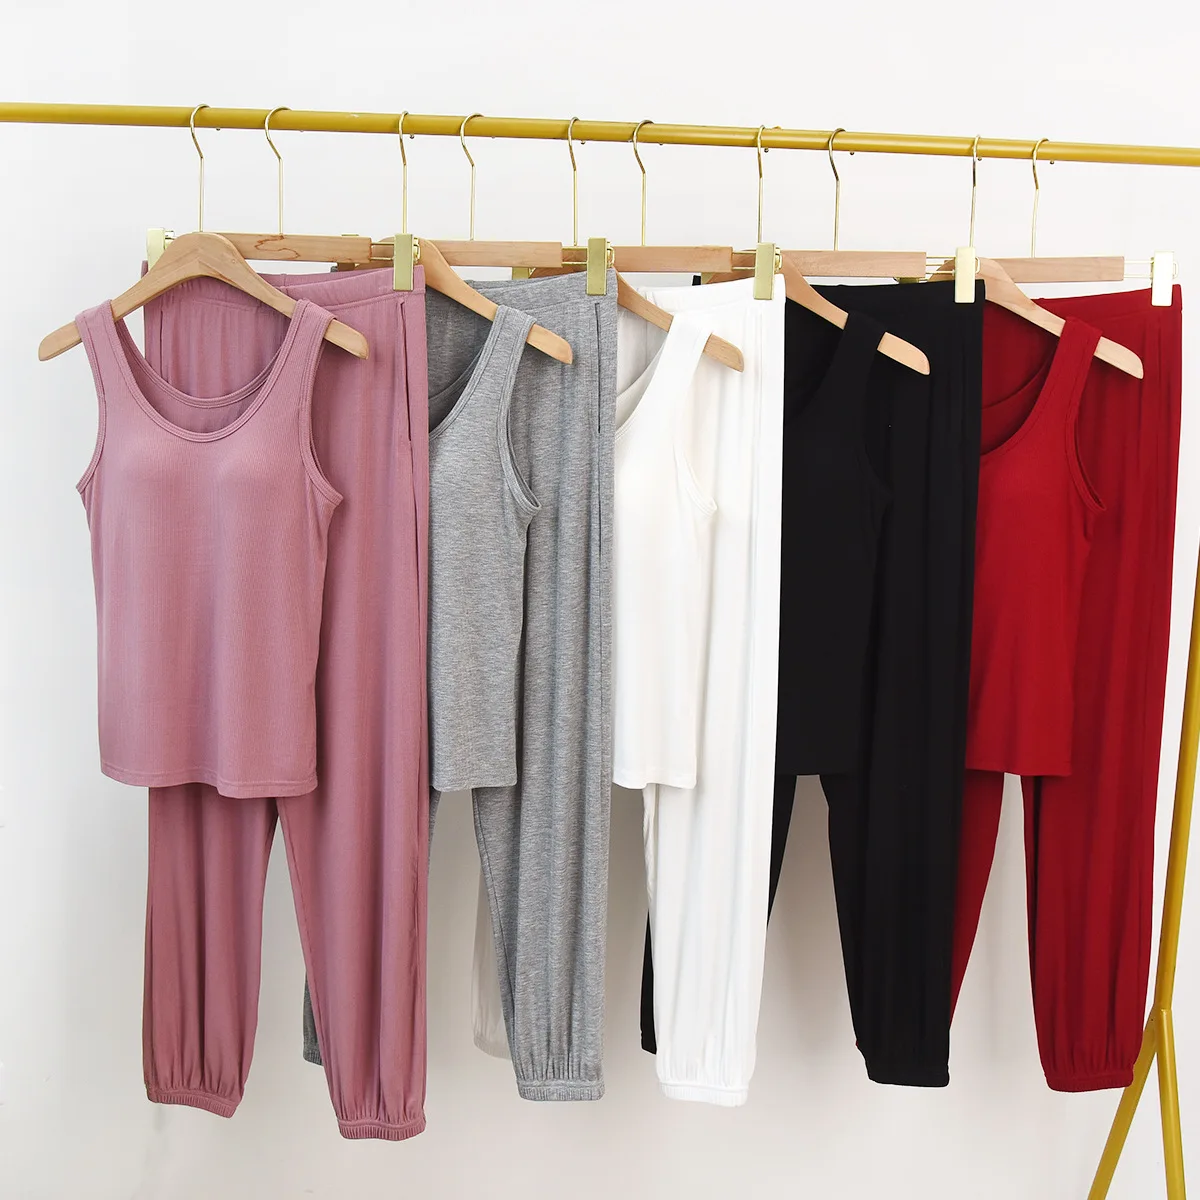 Fdfklak New Arrivals Women Sleeveless Tops+Trousers 2 Pieces Suit Lingerie Pyjamas Set Summer Pijama Loose Nightwear